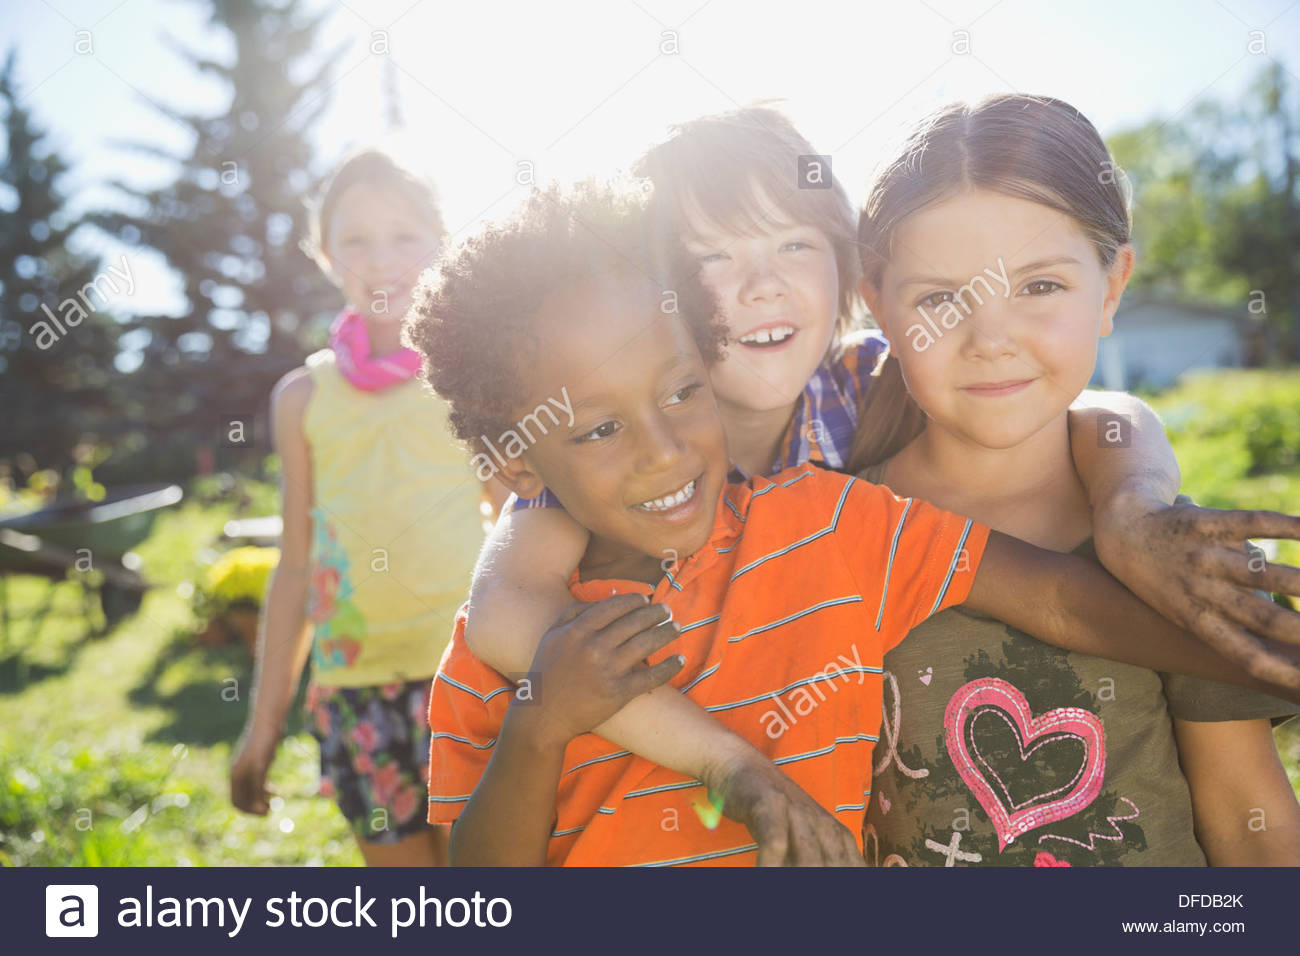 Playful children in community garden Stock Photo